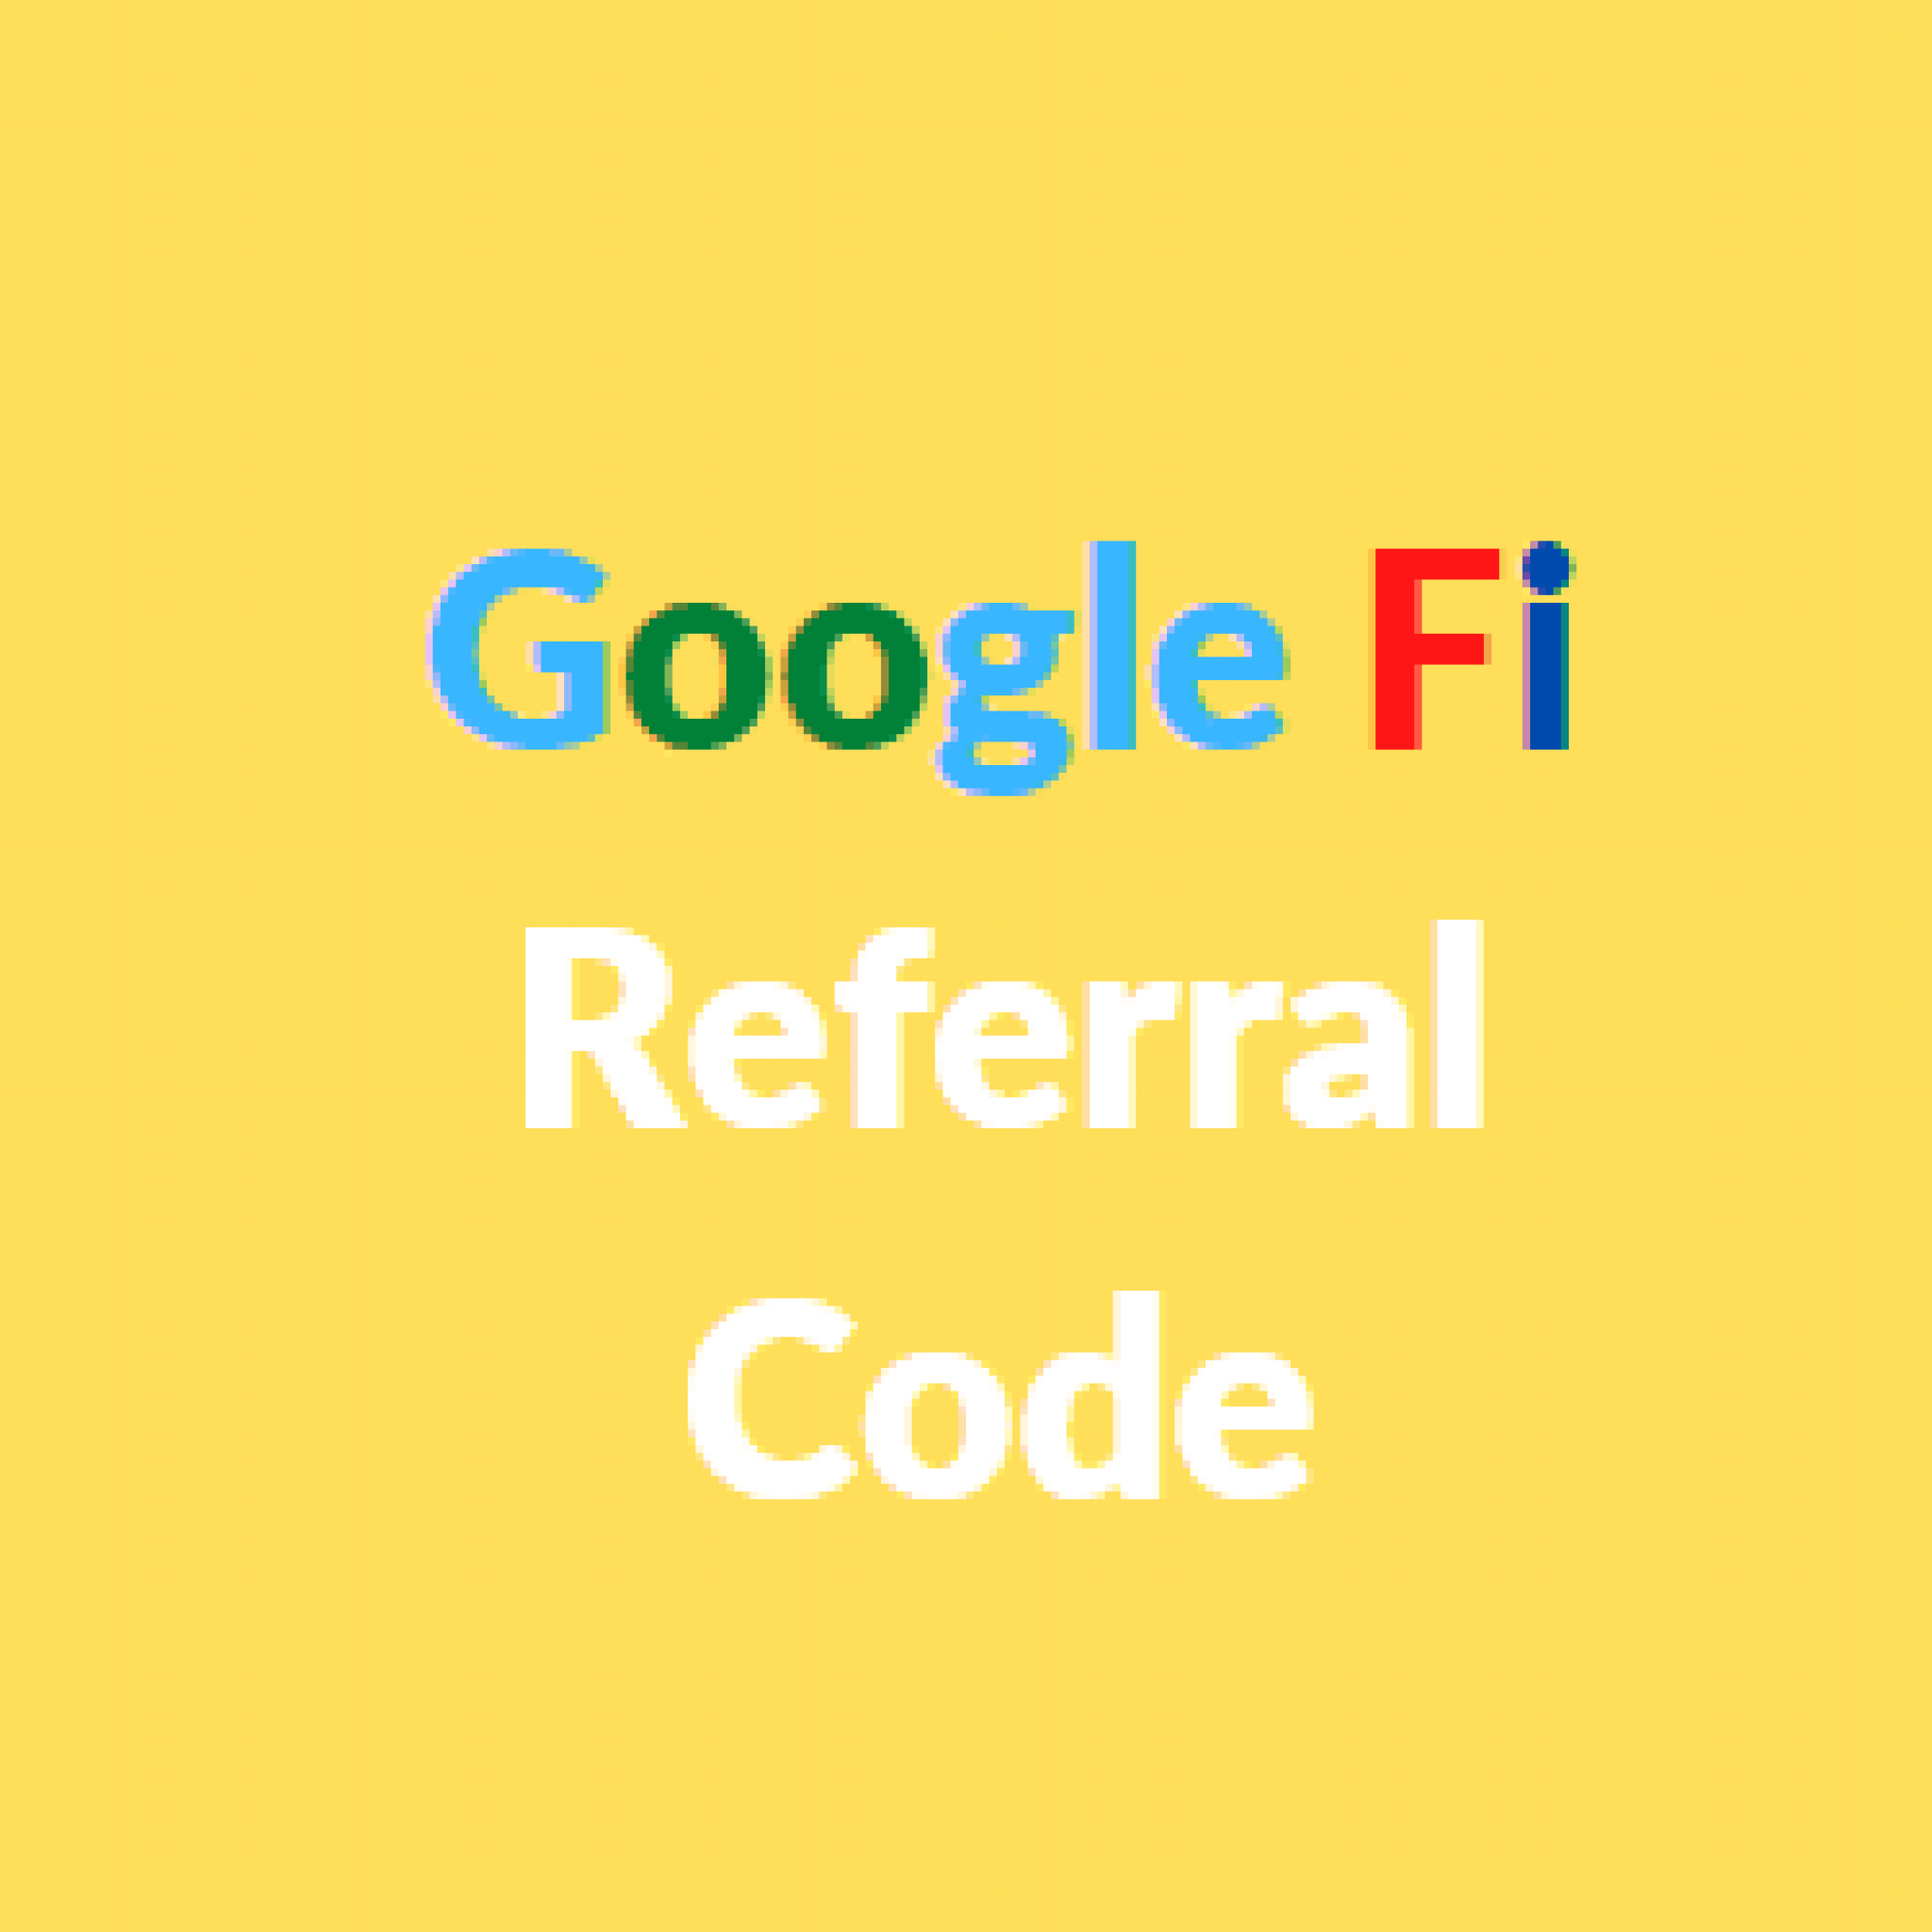 Google Fi Referral Code [2023] Get 20 Credits on Referring